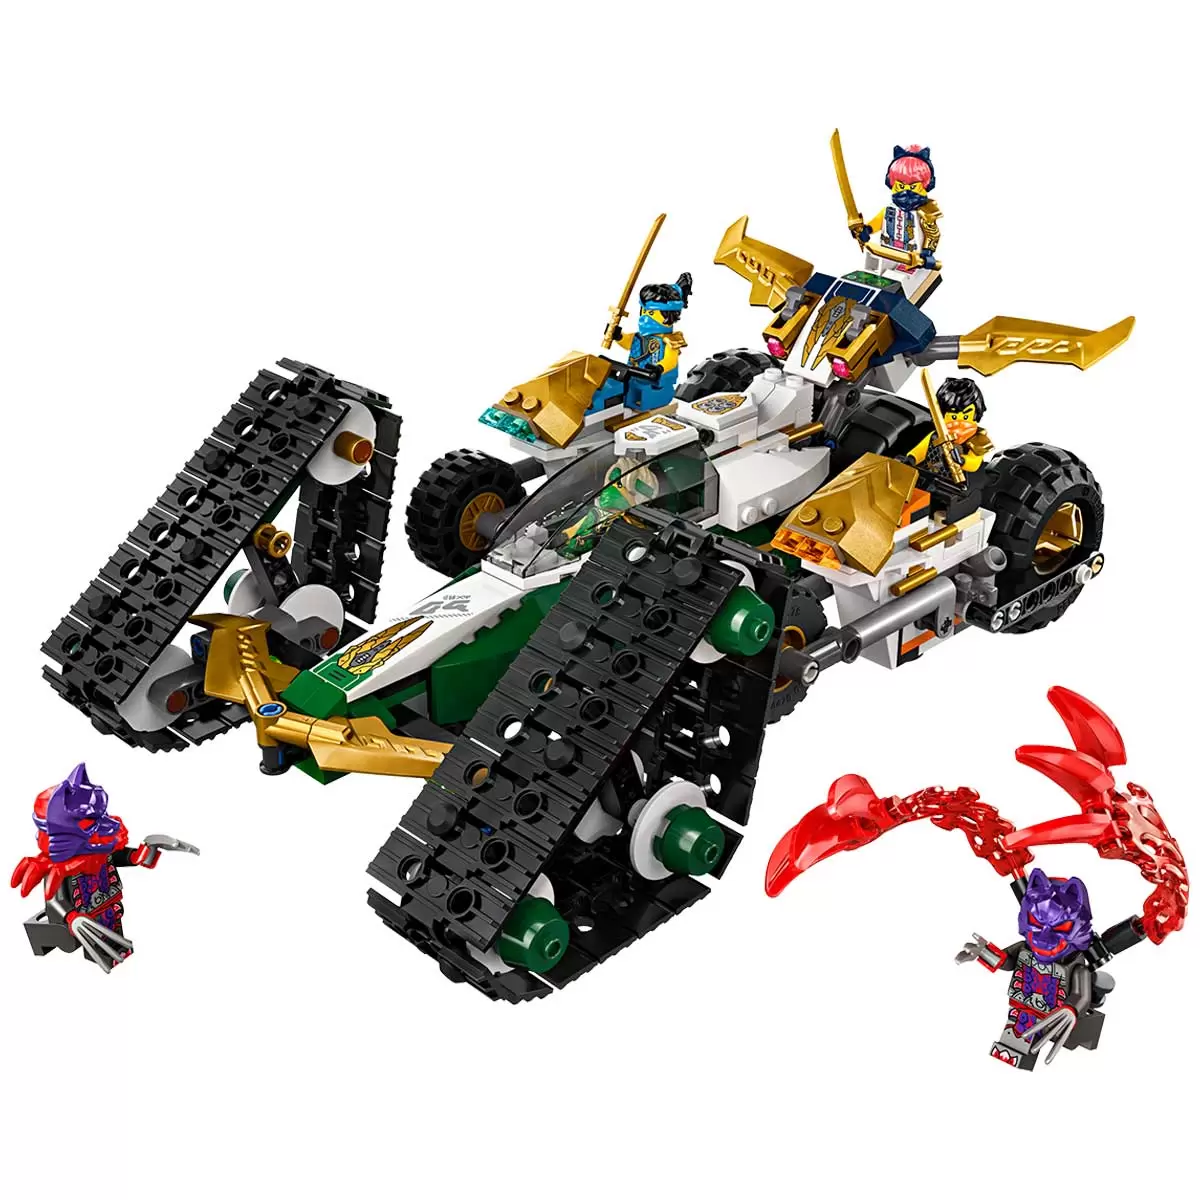 LEGO NINJAGO Ninja Team Combo Vehicle 71820